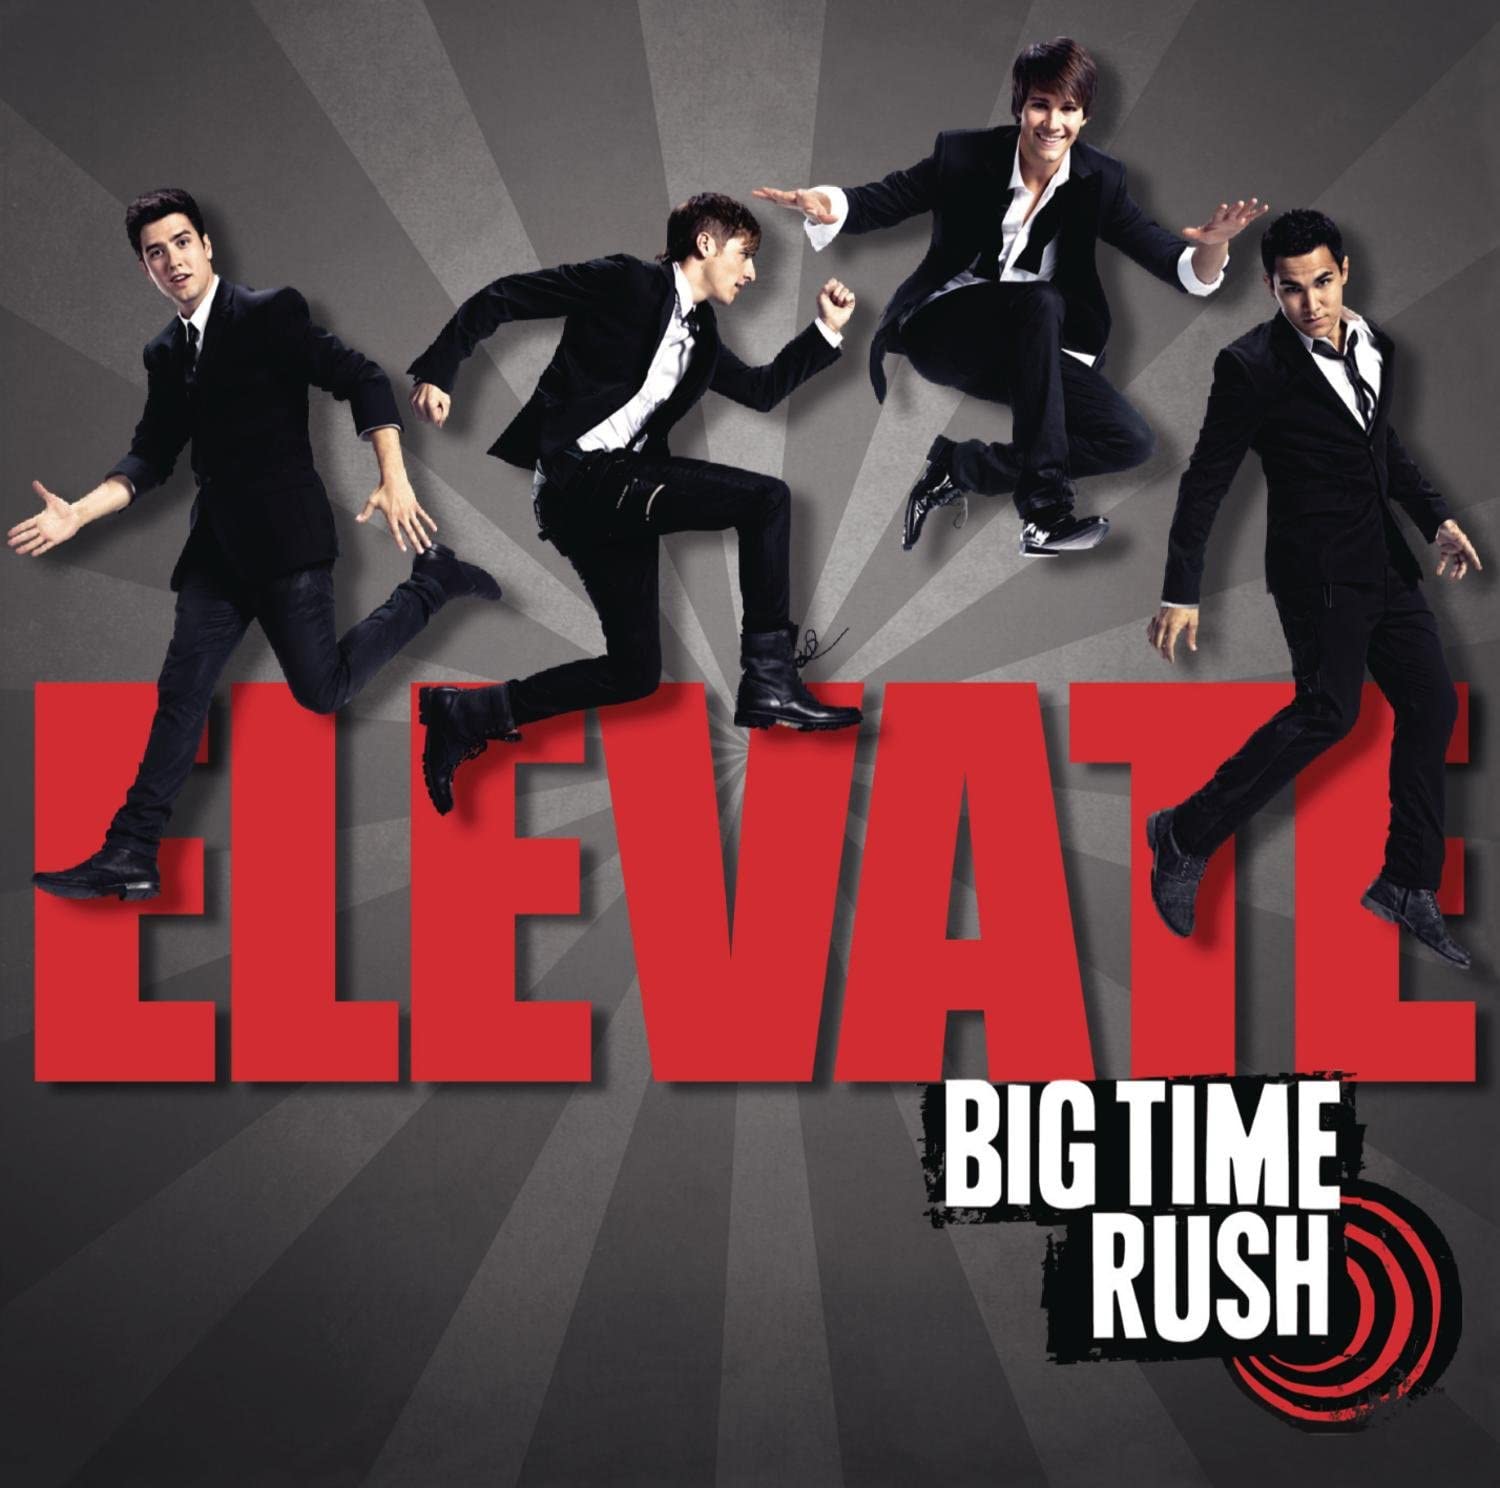 Big Time Rush Elevate cover artwork